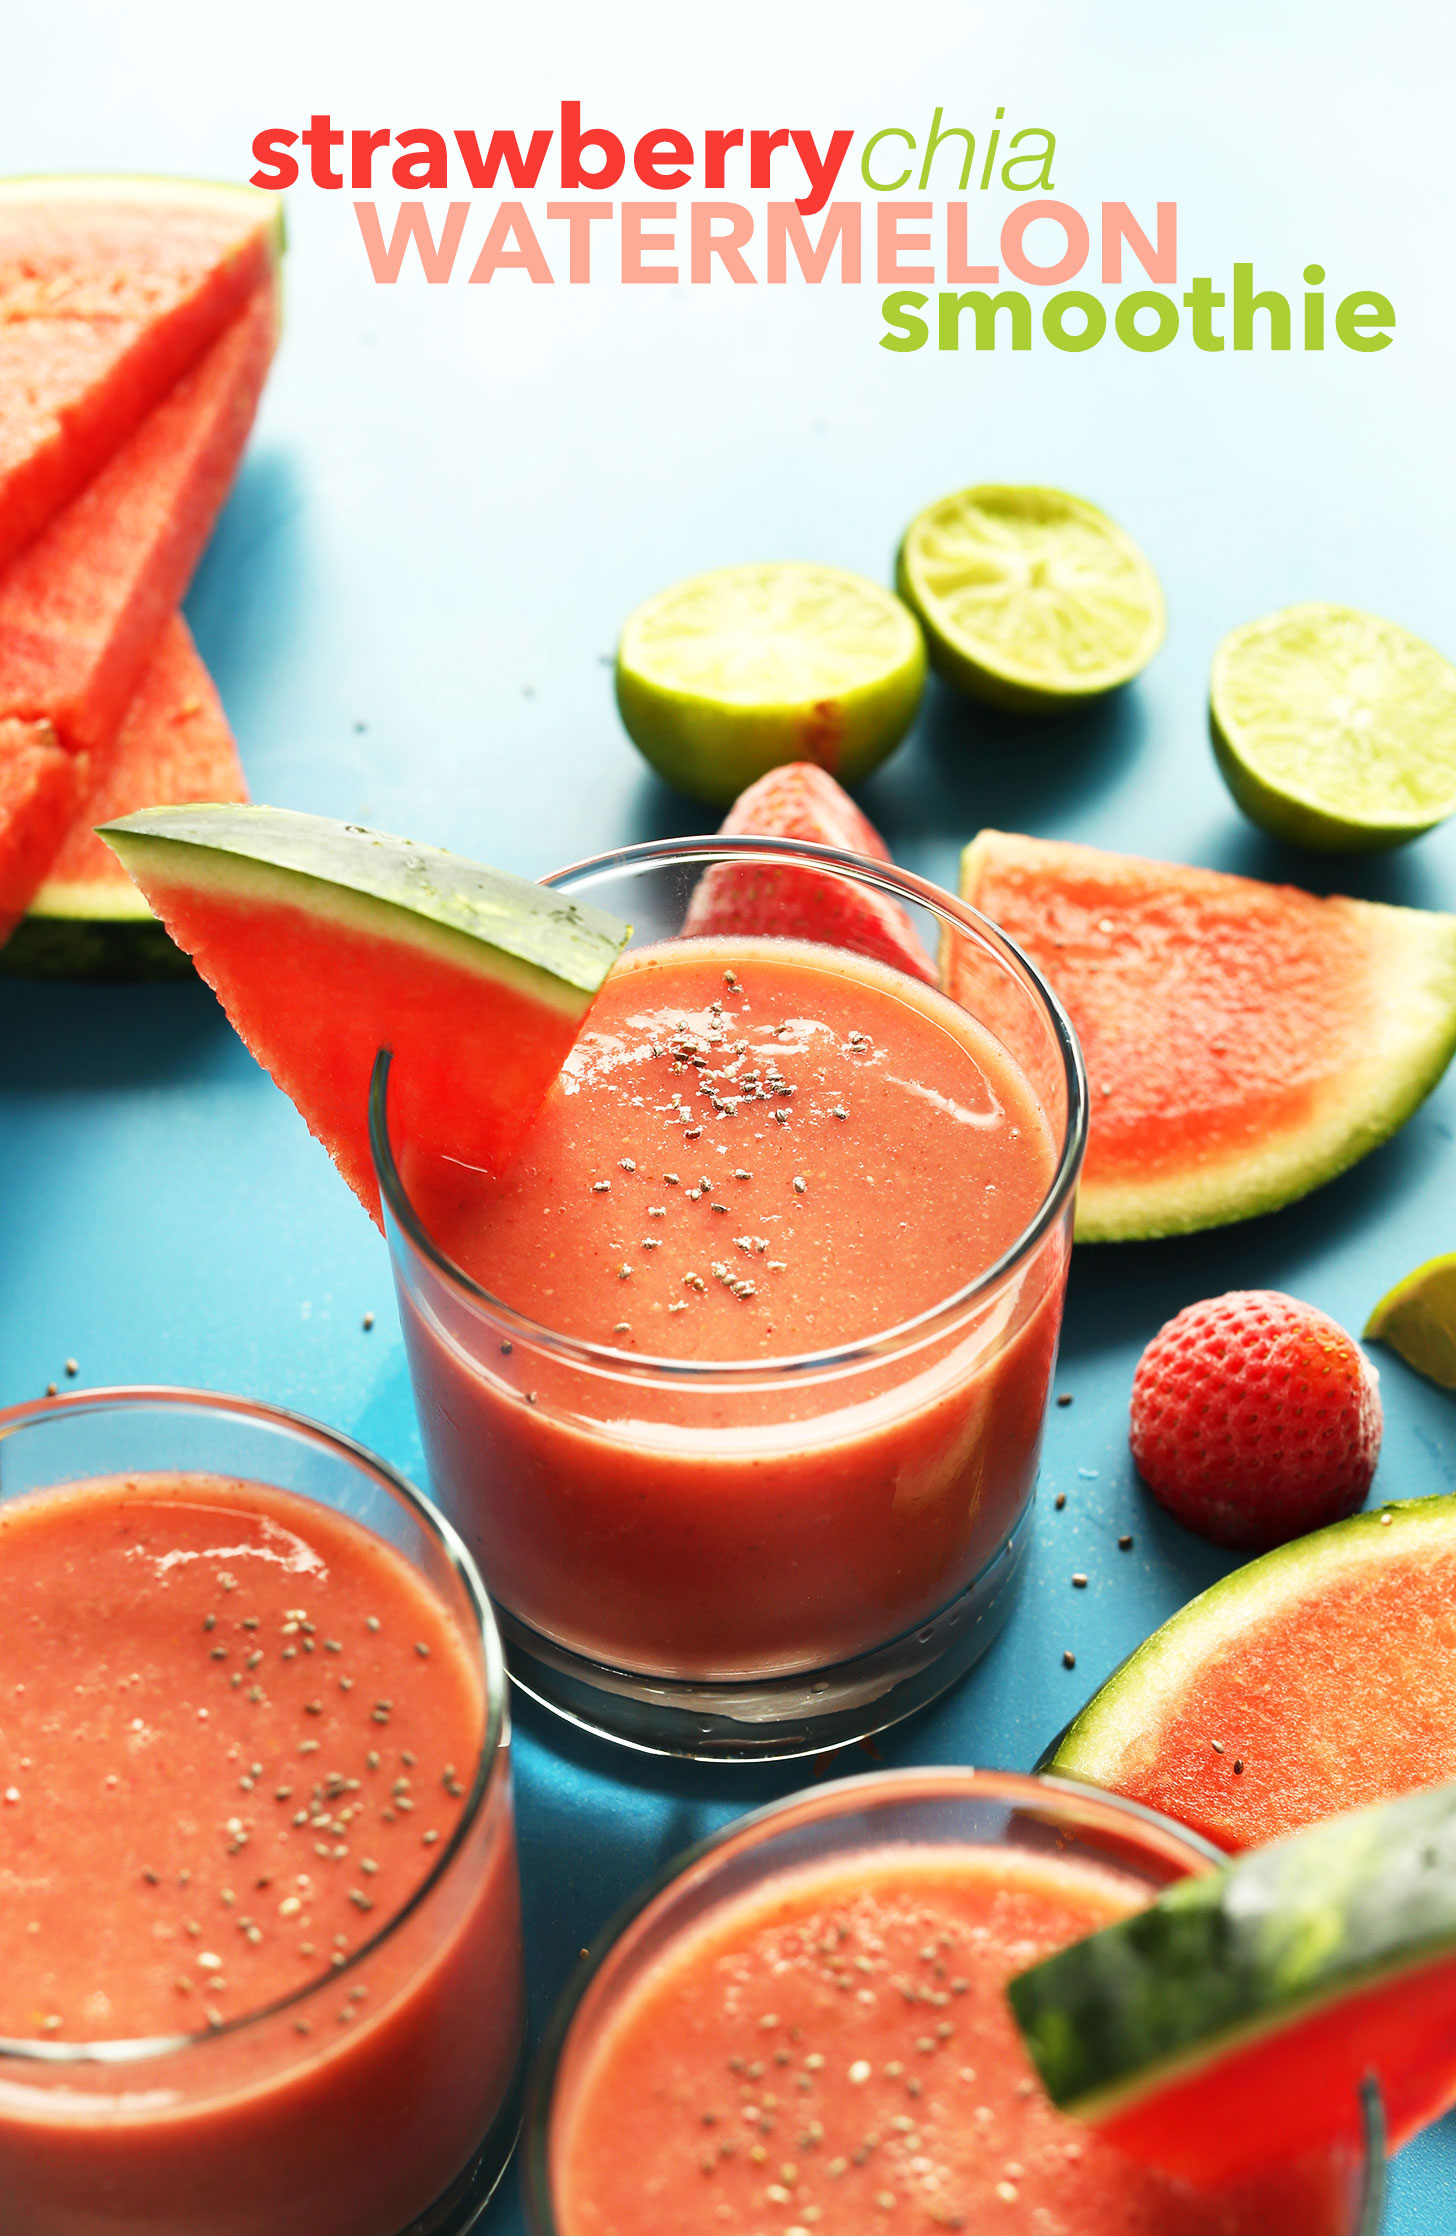 Amazing-watermelon-strawberry-smoothie-hydrating-refreshing-perfect-for-summer-vegan-glutenfree-healthy-recipe-breakfast